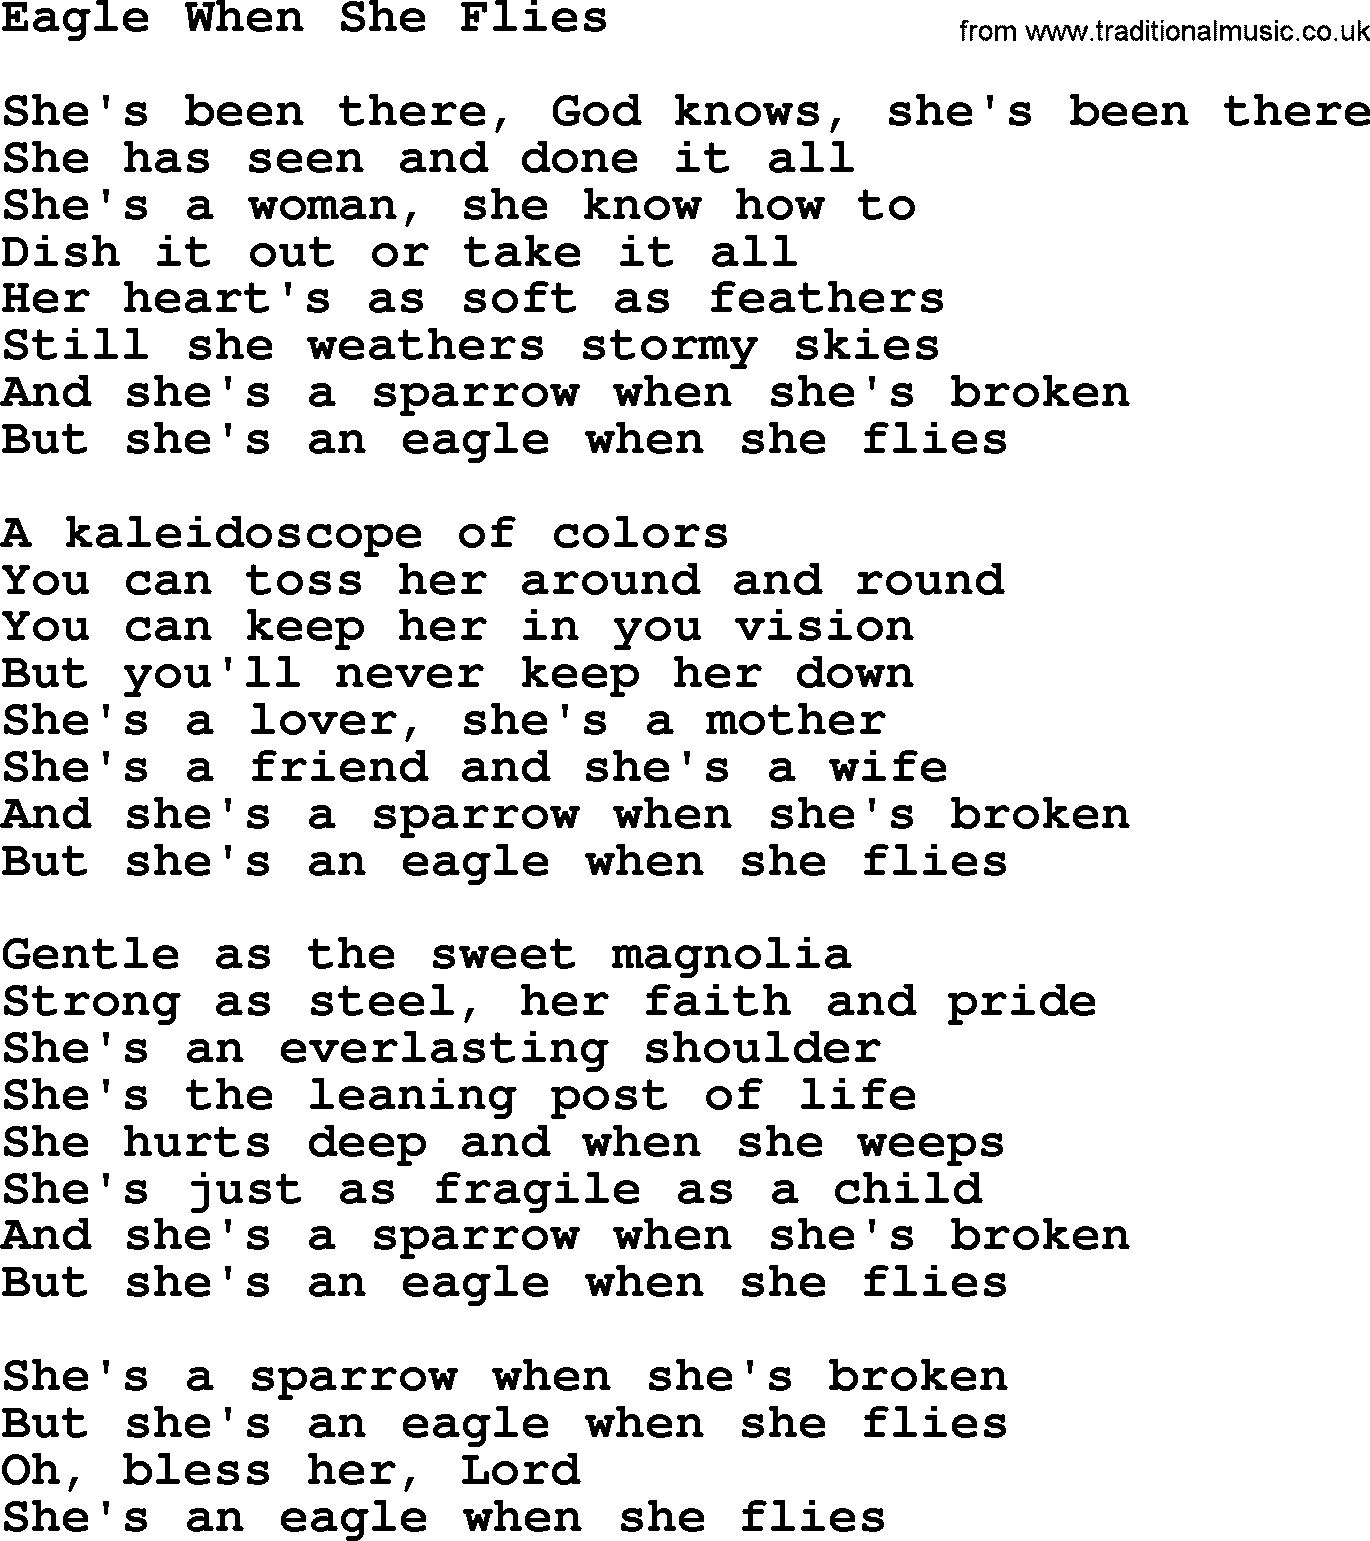 Dolly Parton song Eagle When She Flies.txt lyrics